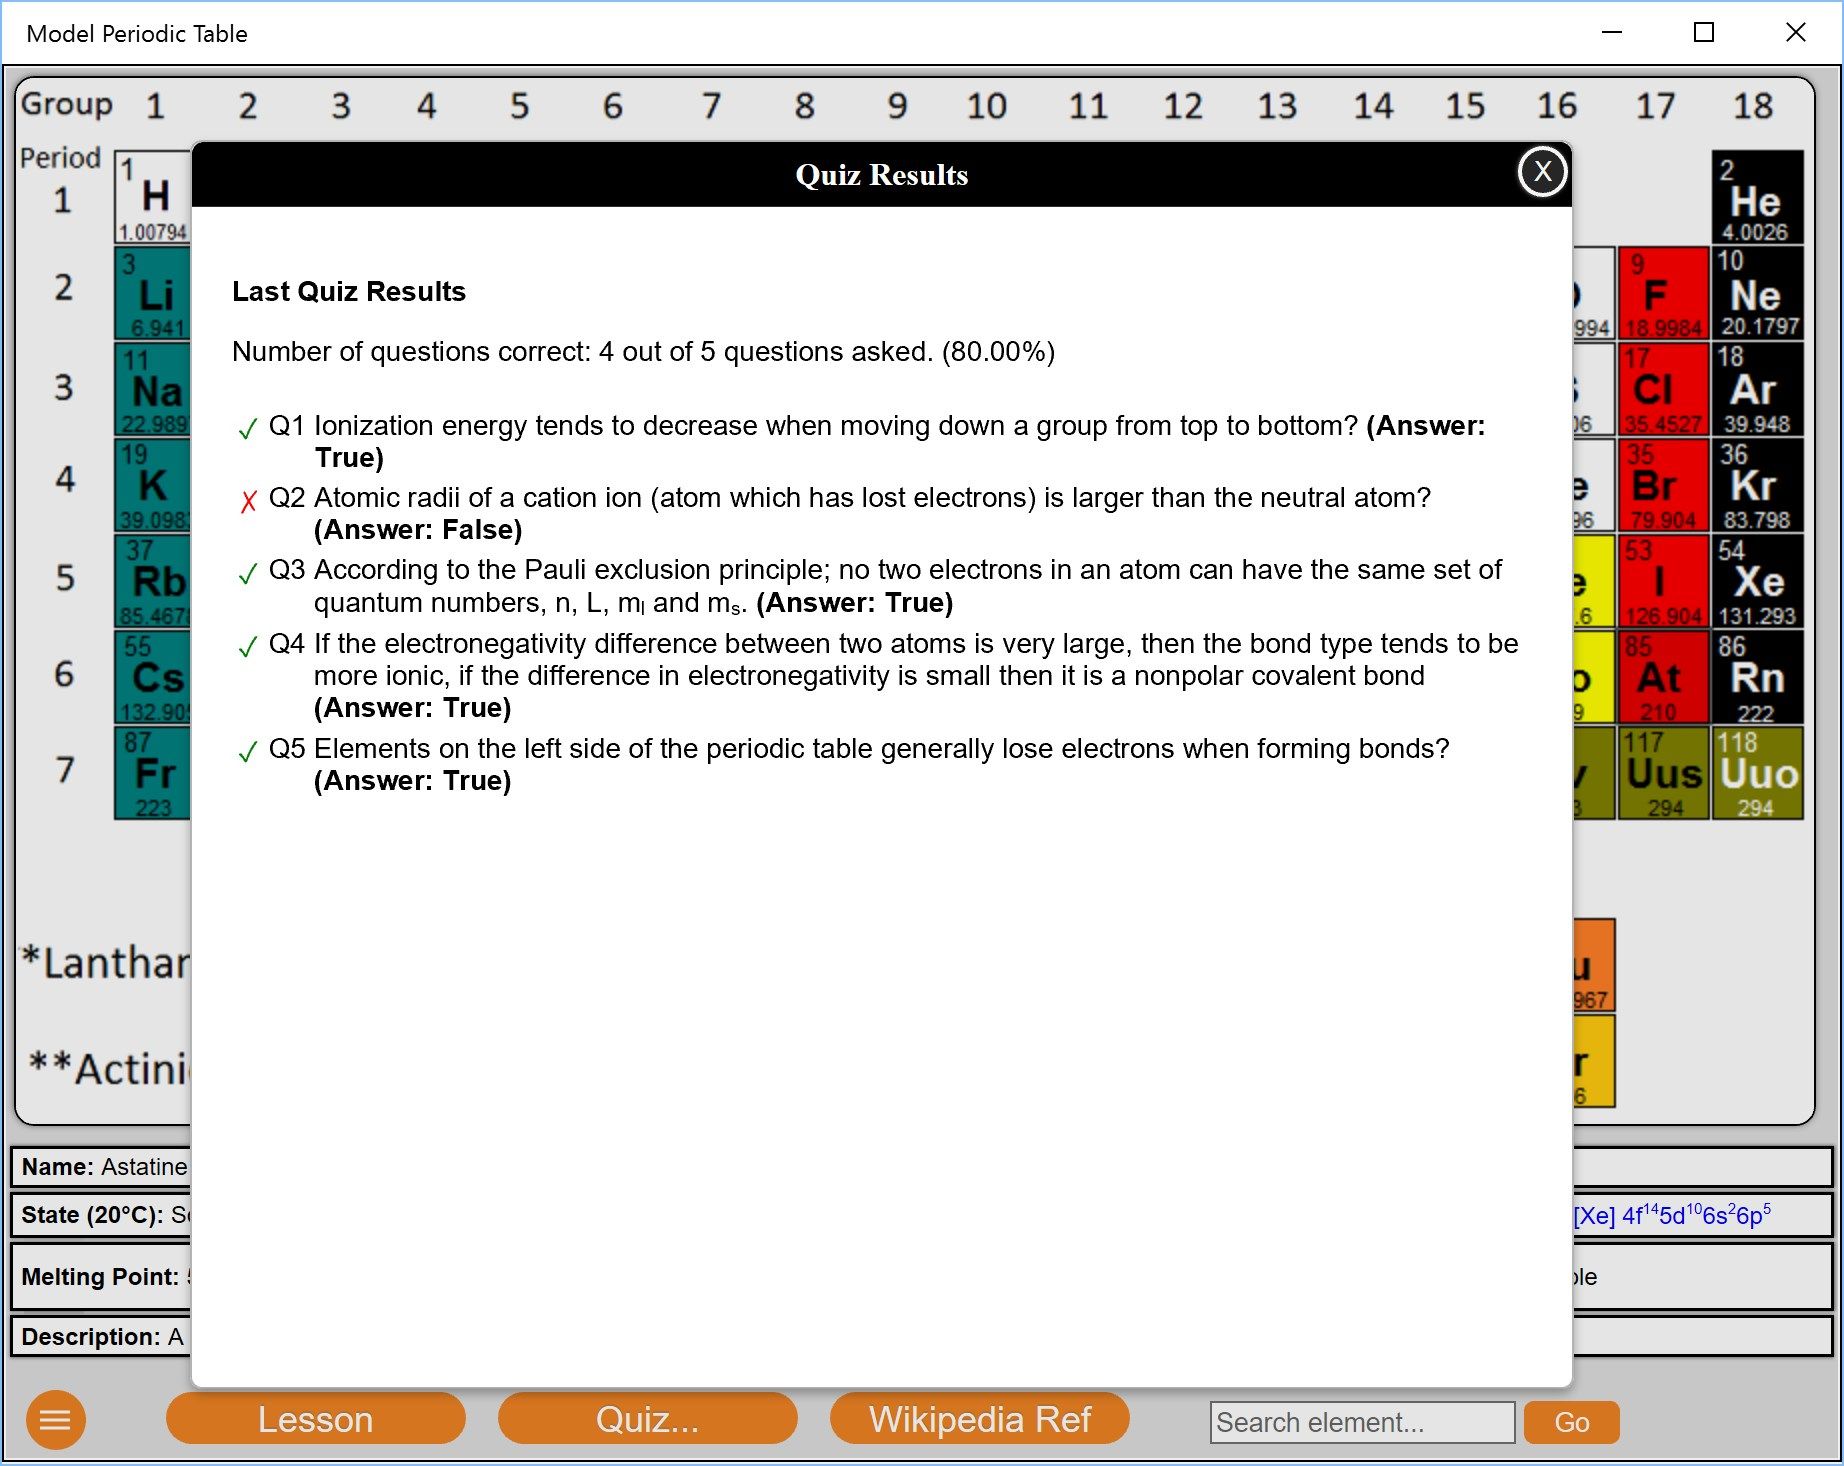 Model Periodic Table Quiz Result Screen